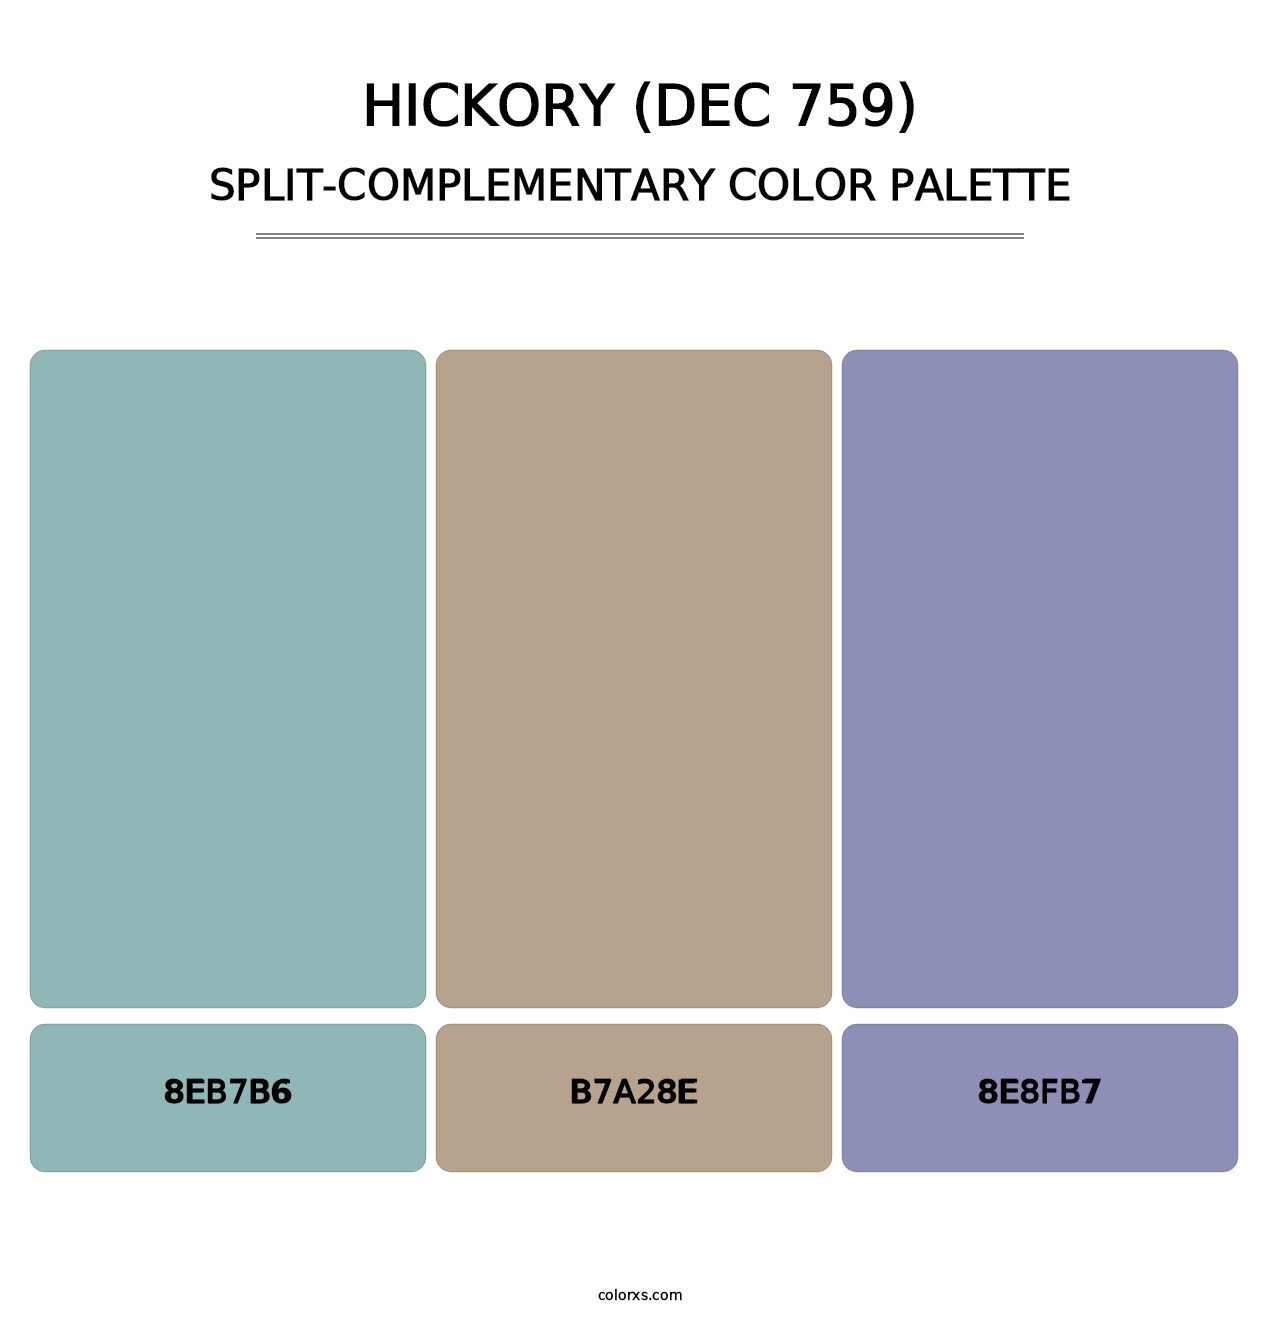 Hickory (DEC 759) - Split-Complementary Color Palette